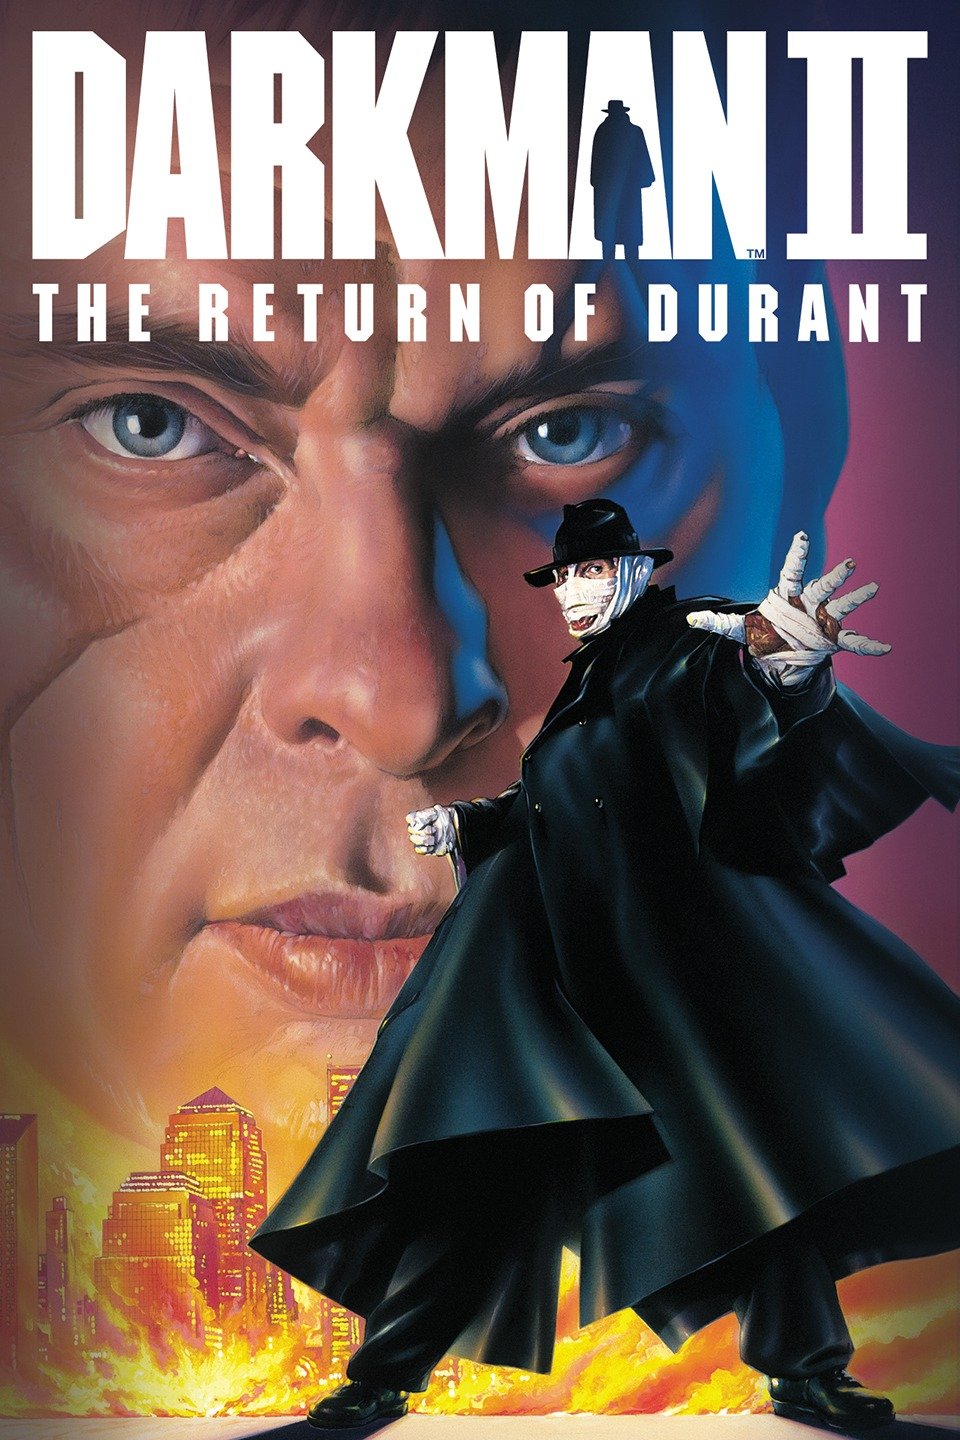 [MINI-HD] Darkman II: The Return of Durant (1995) ดาร์คแมน กลับจากนรก ภาค 2 [720p] [พากย์ไทย 5.1 + เสียงอังกฤษ DTS] [บรรยายไทย + อังกฤษ] [เสียงไทย + ซับไทย] [OPENLOAD]